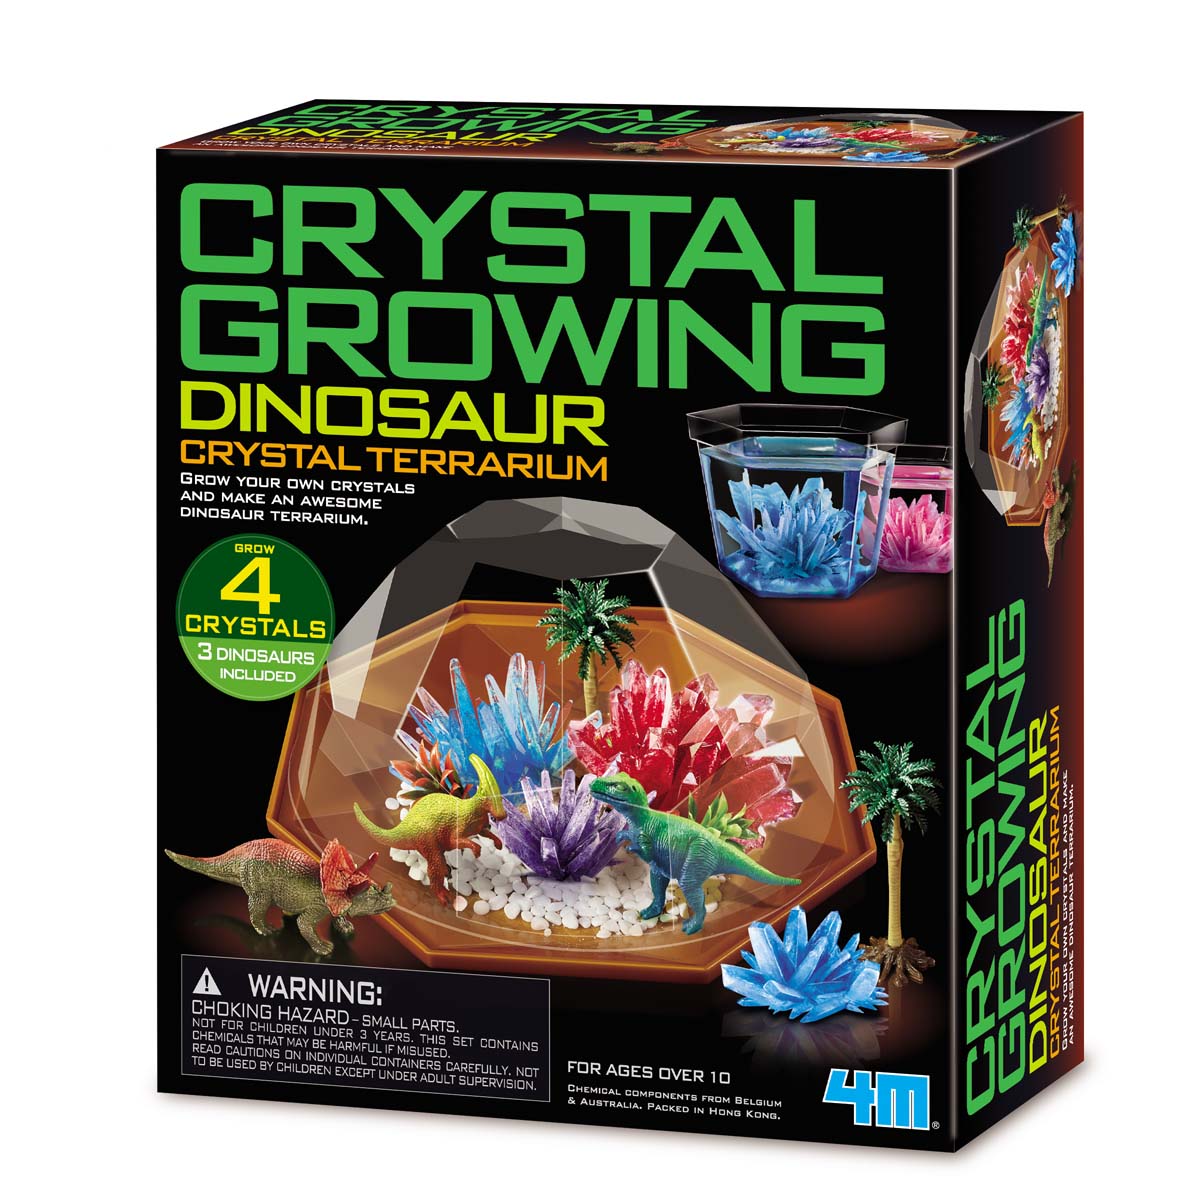 4M-Crystal Growing Dinosaur Crystal Terrarium